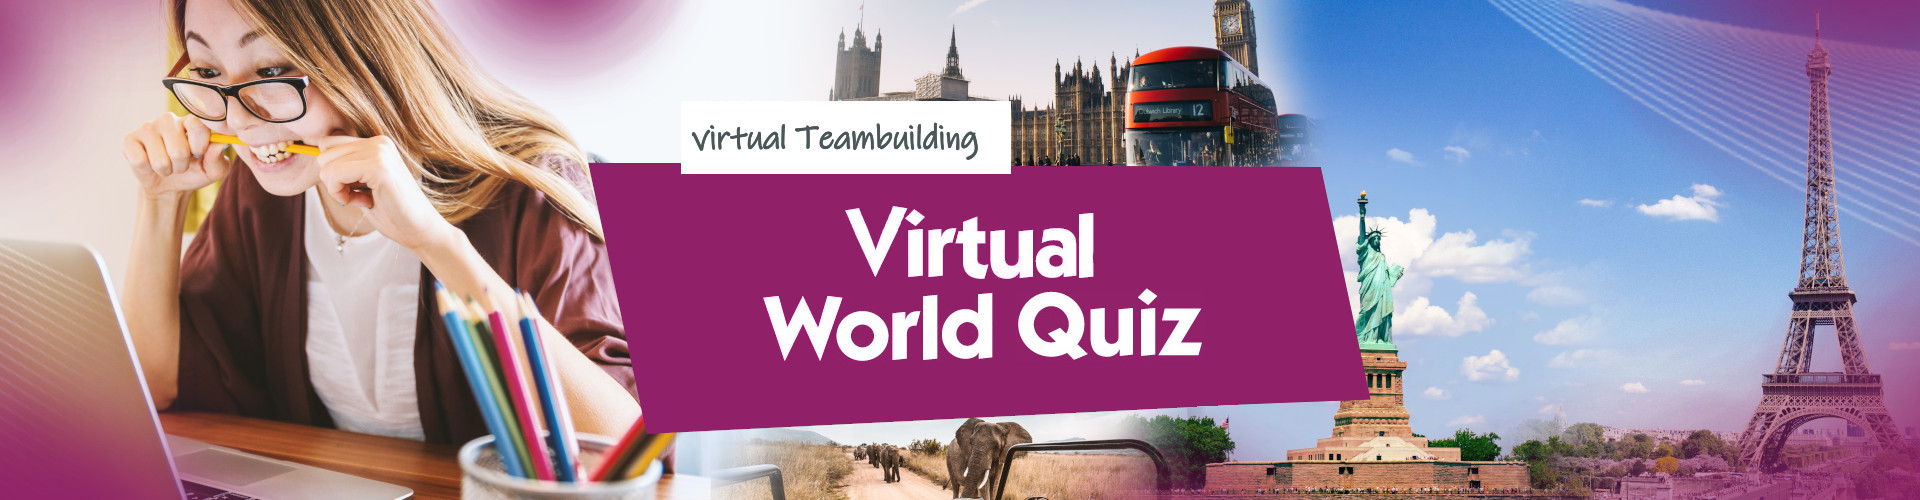 Virtual World Quiz - Banner